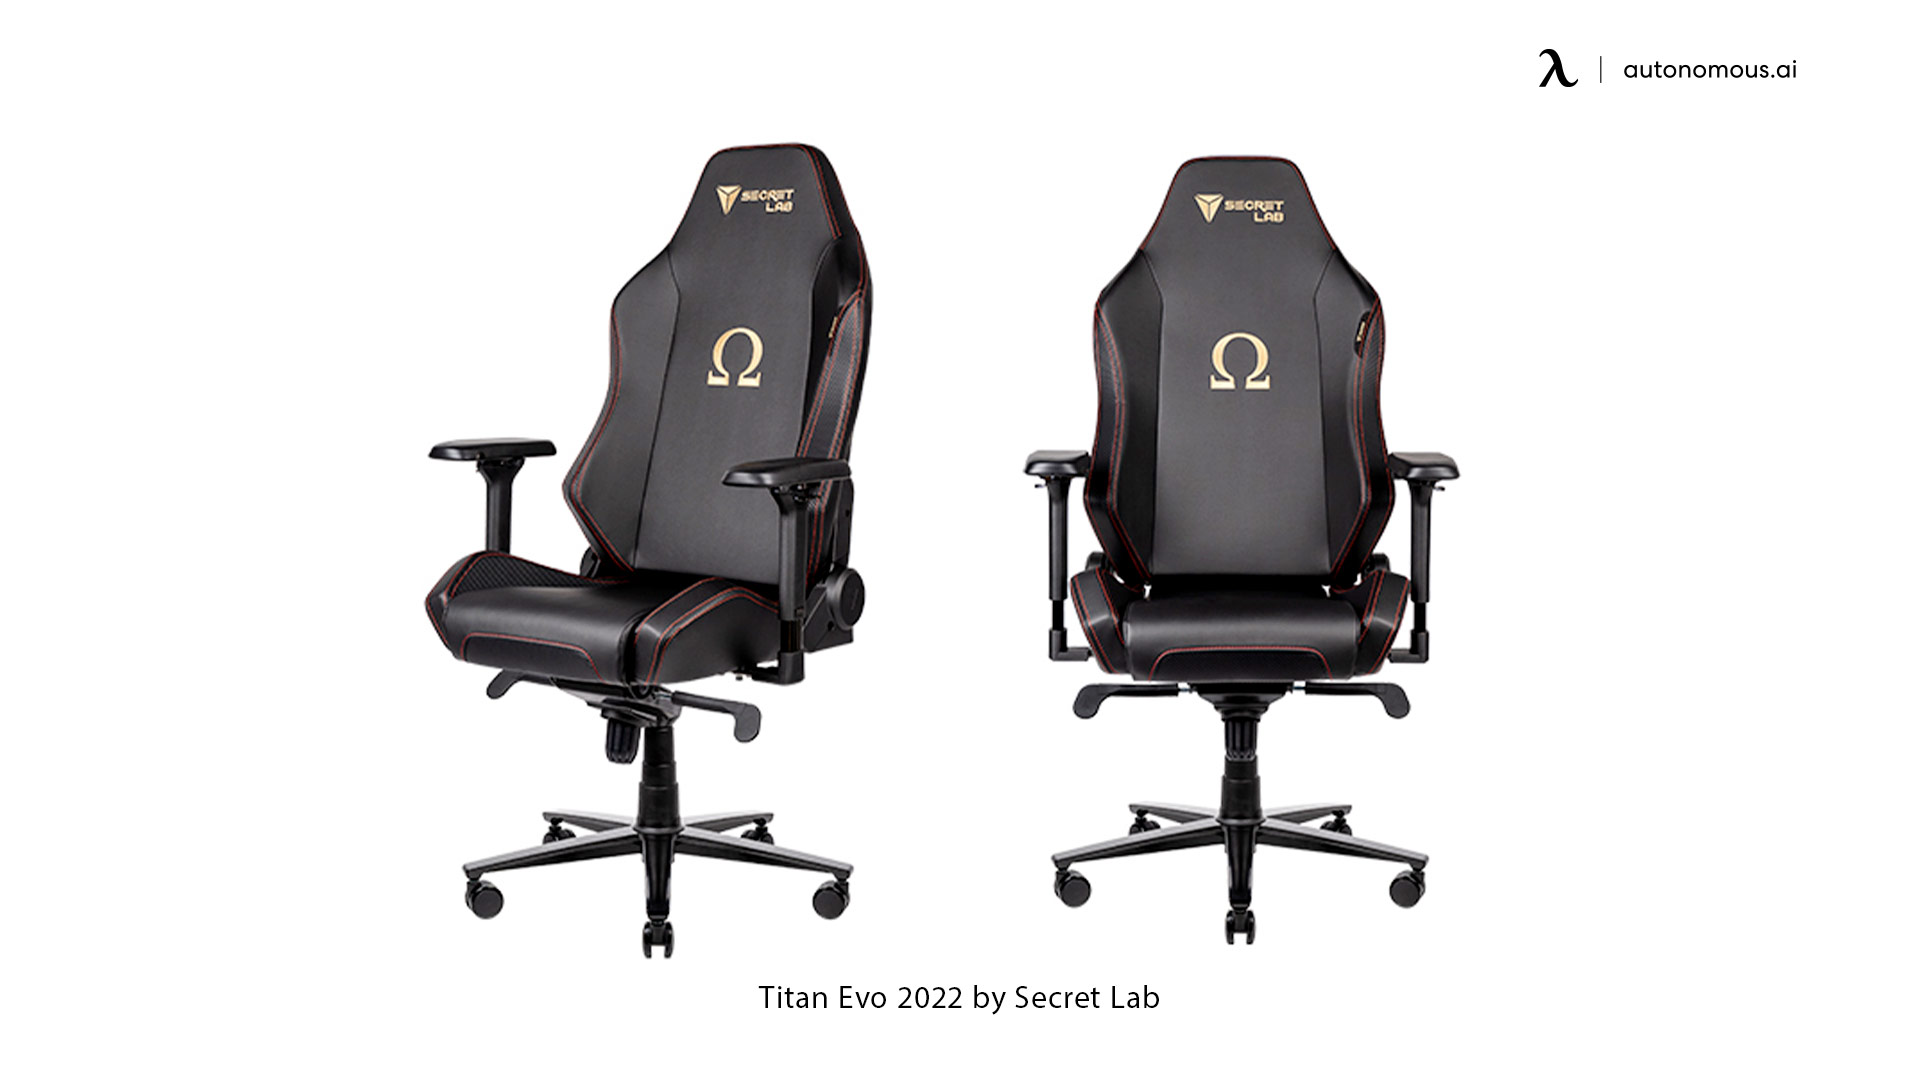 Titan 2020 Series Computer Chair from Secretlab